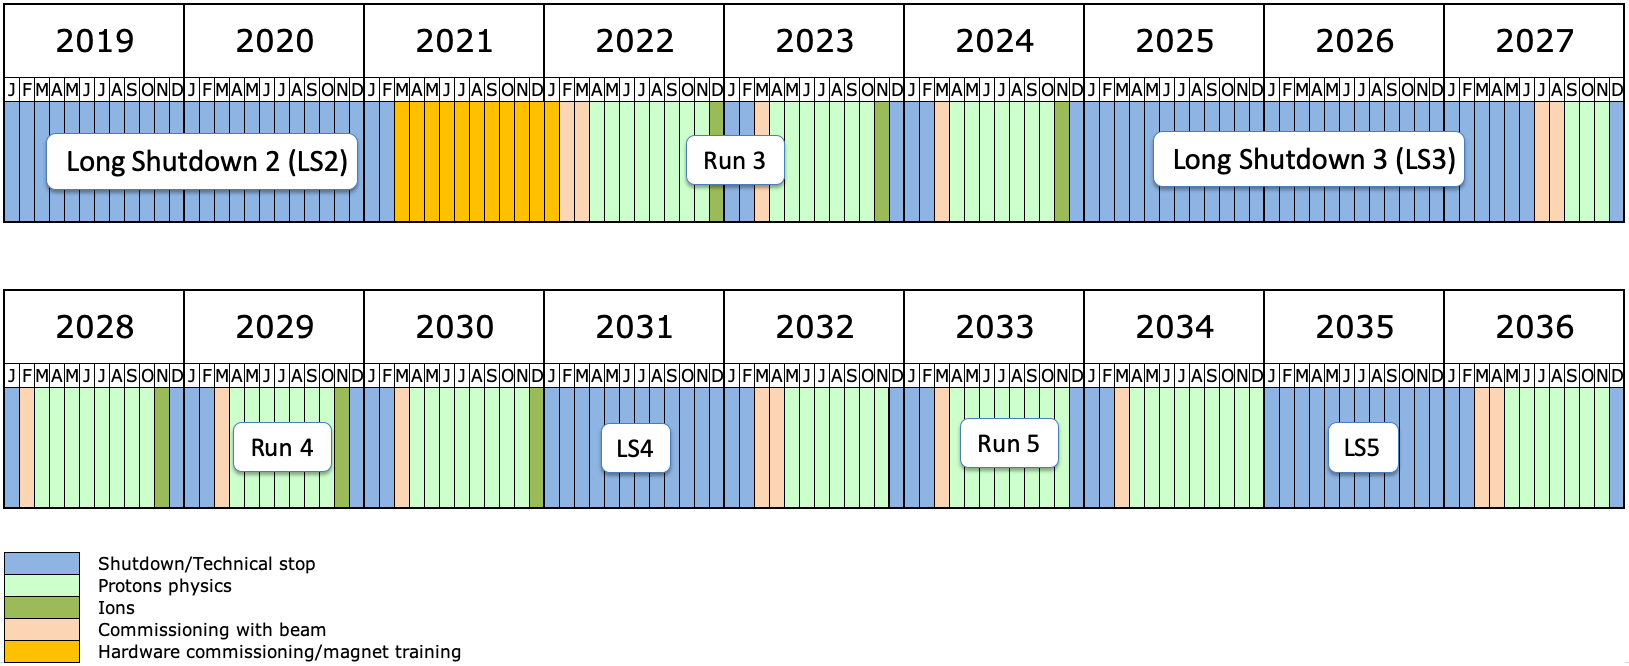 LHC plans to 2036